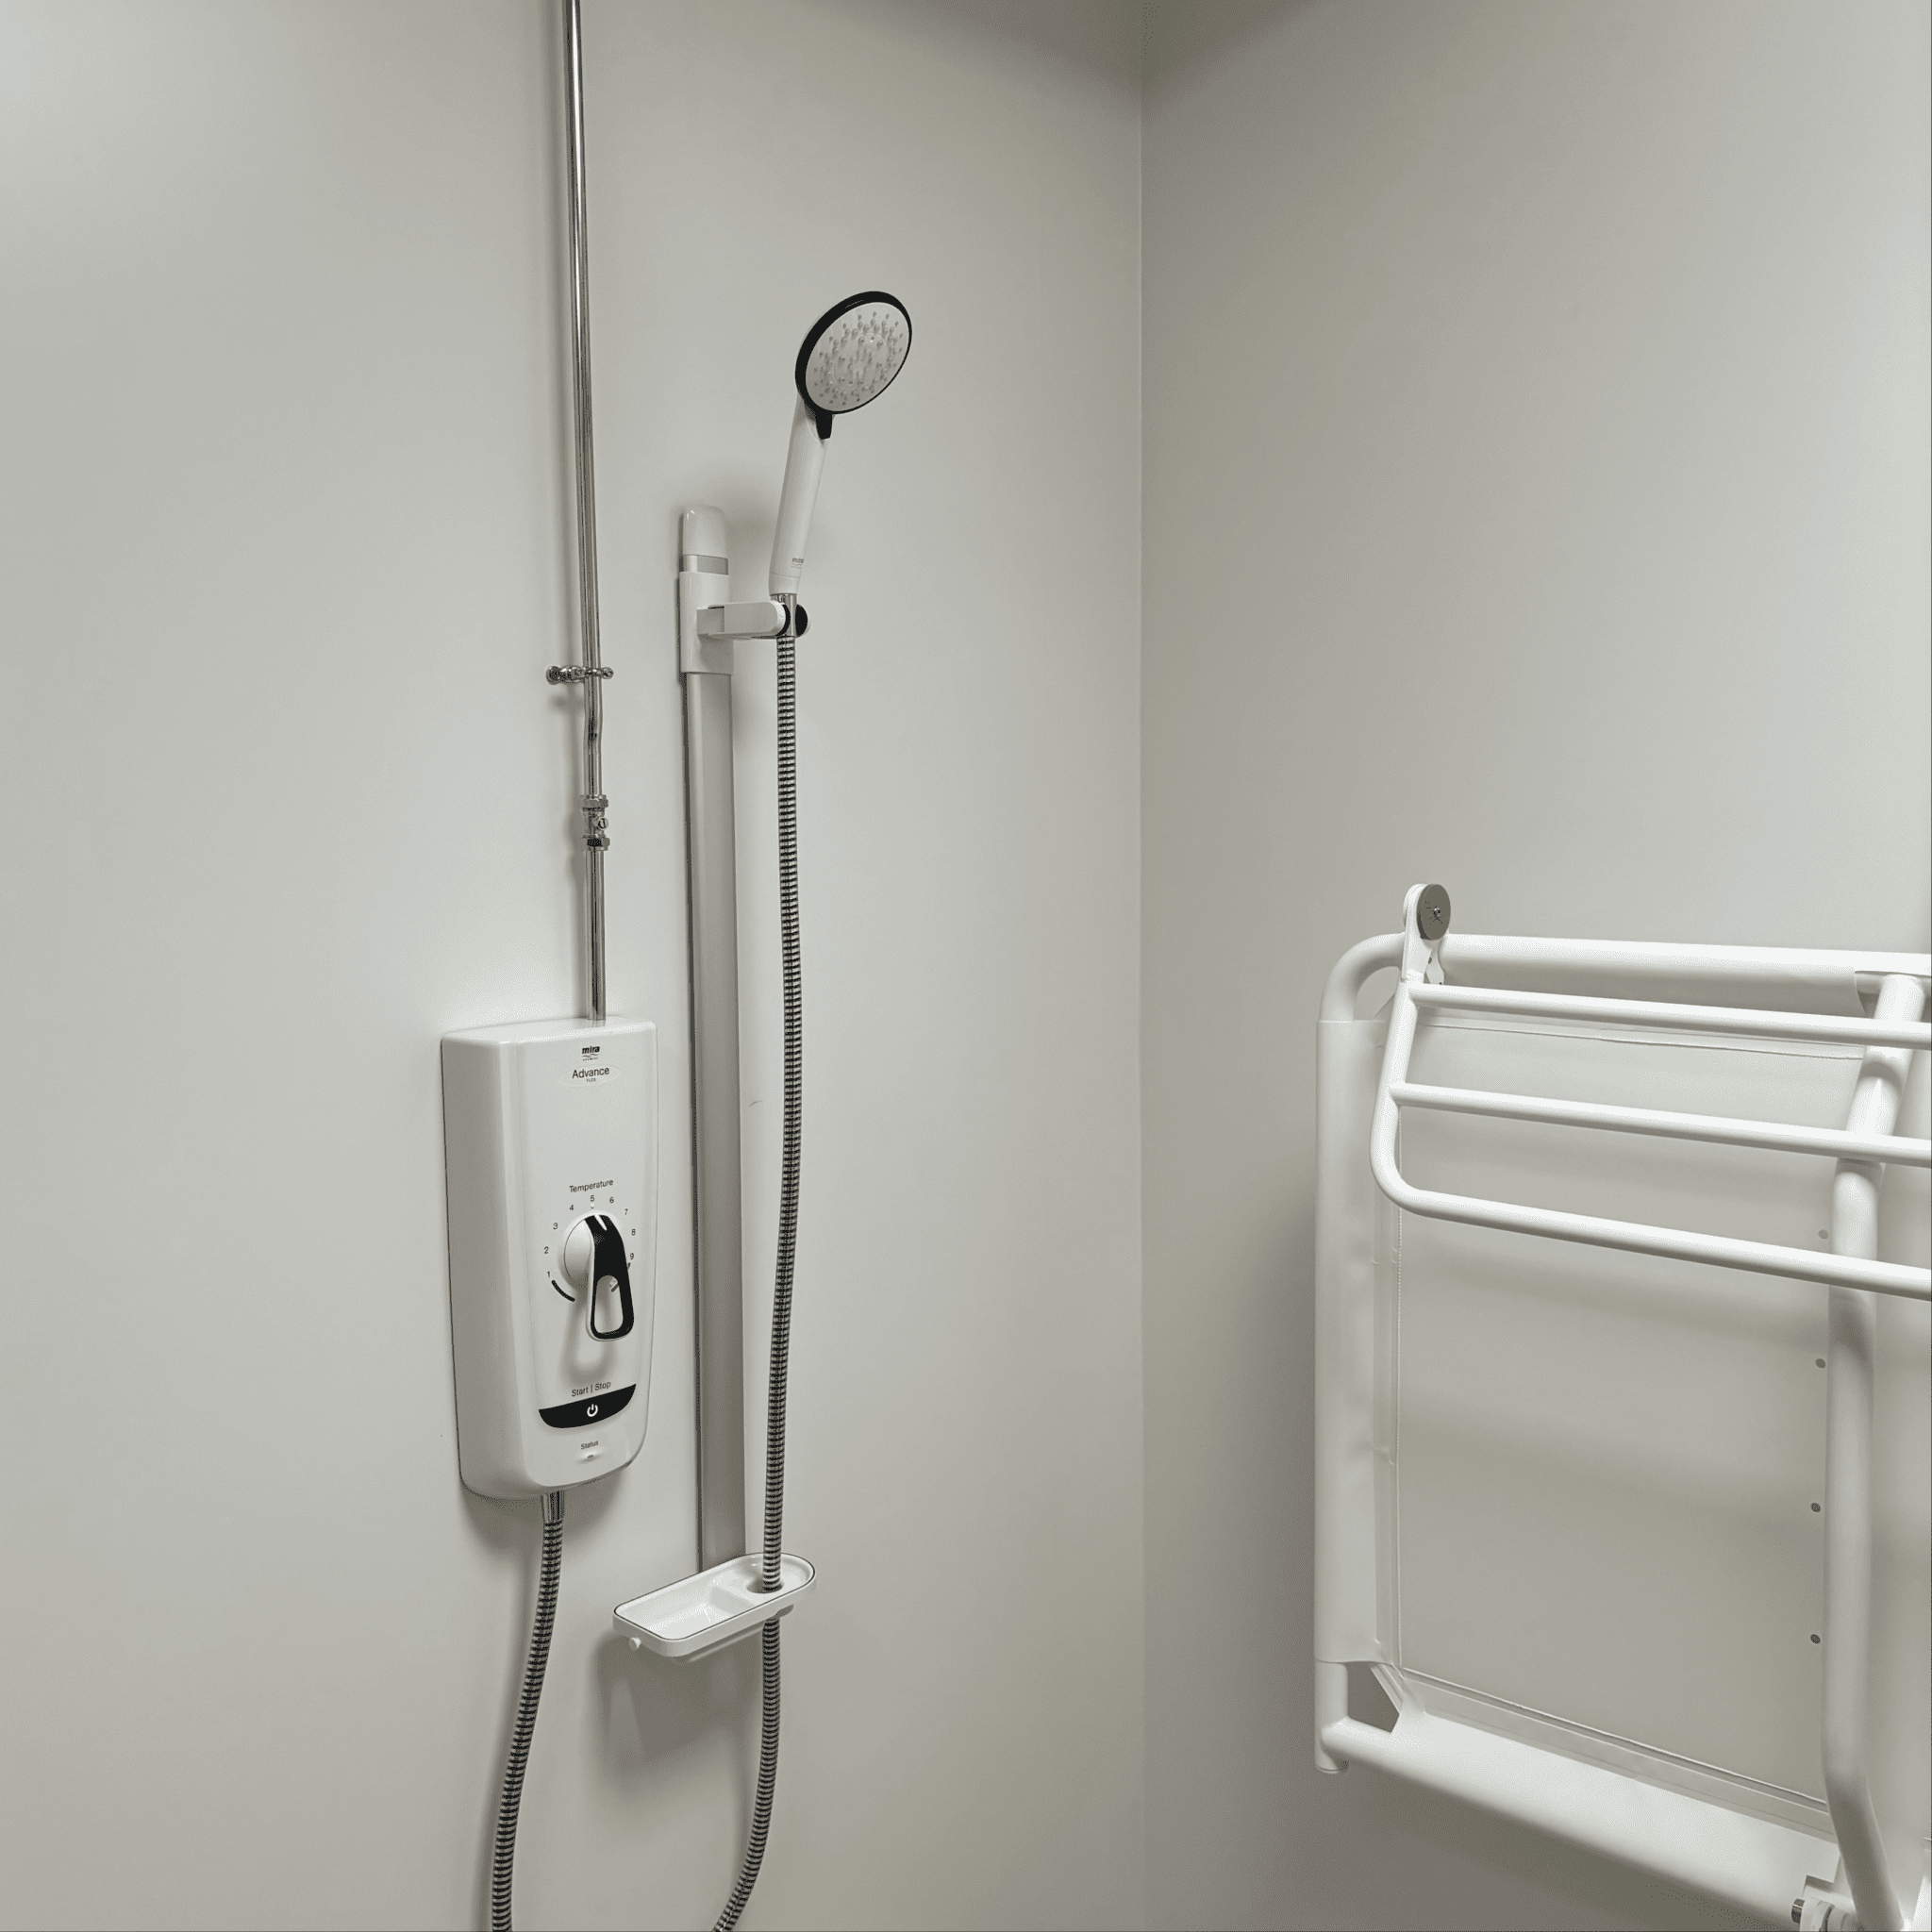 Hygiene Rooms In Schools